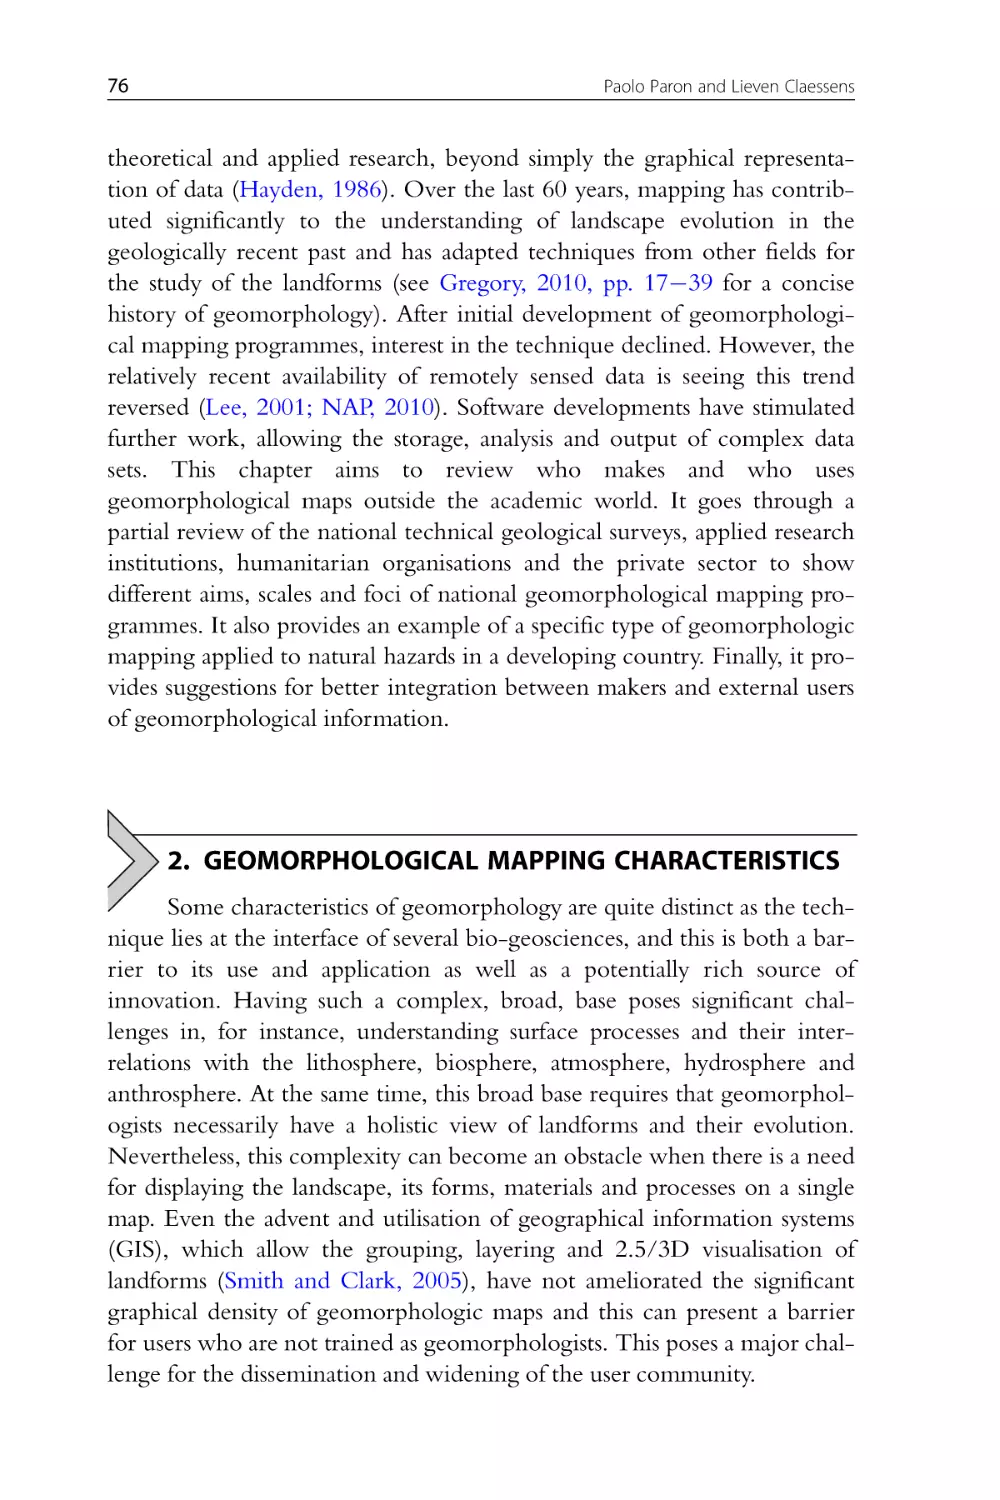 2. Geomorphological Mapping Characteristics